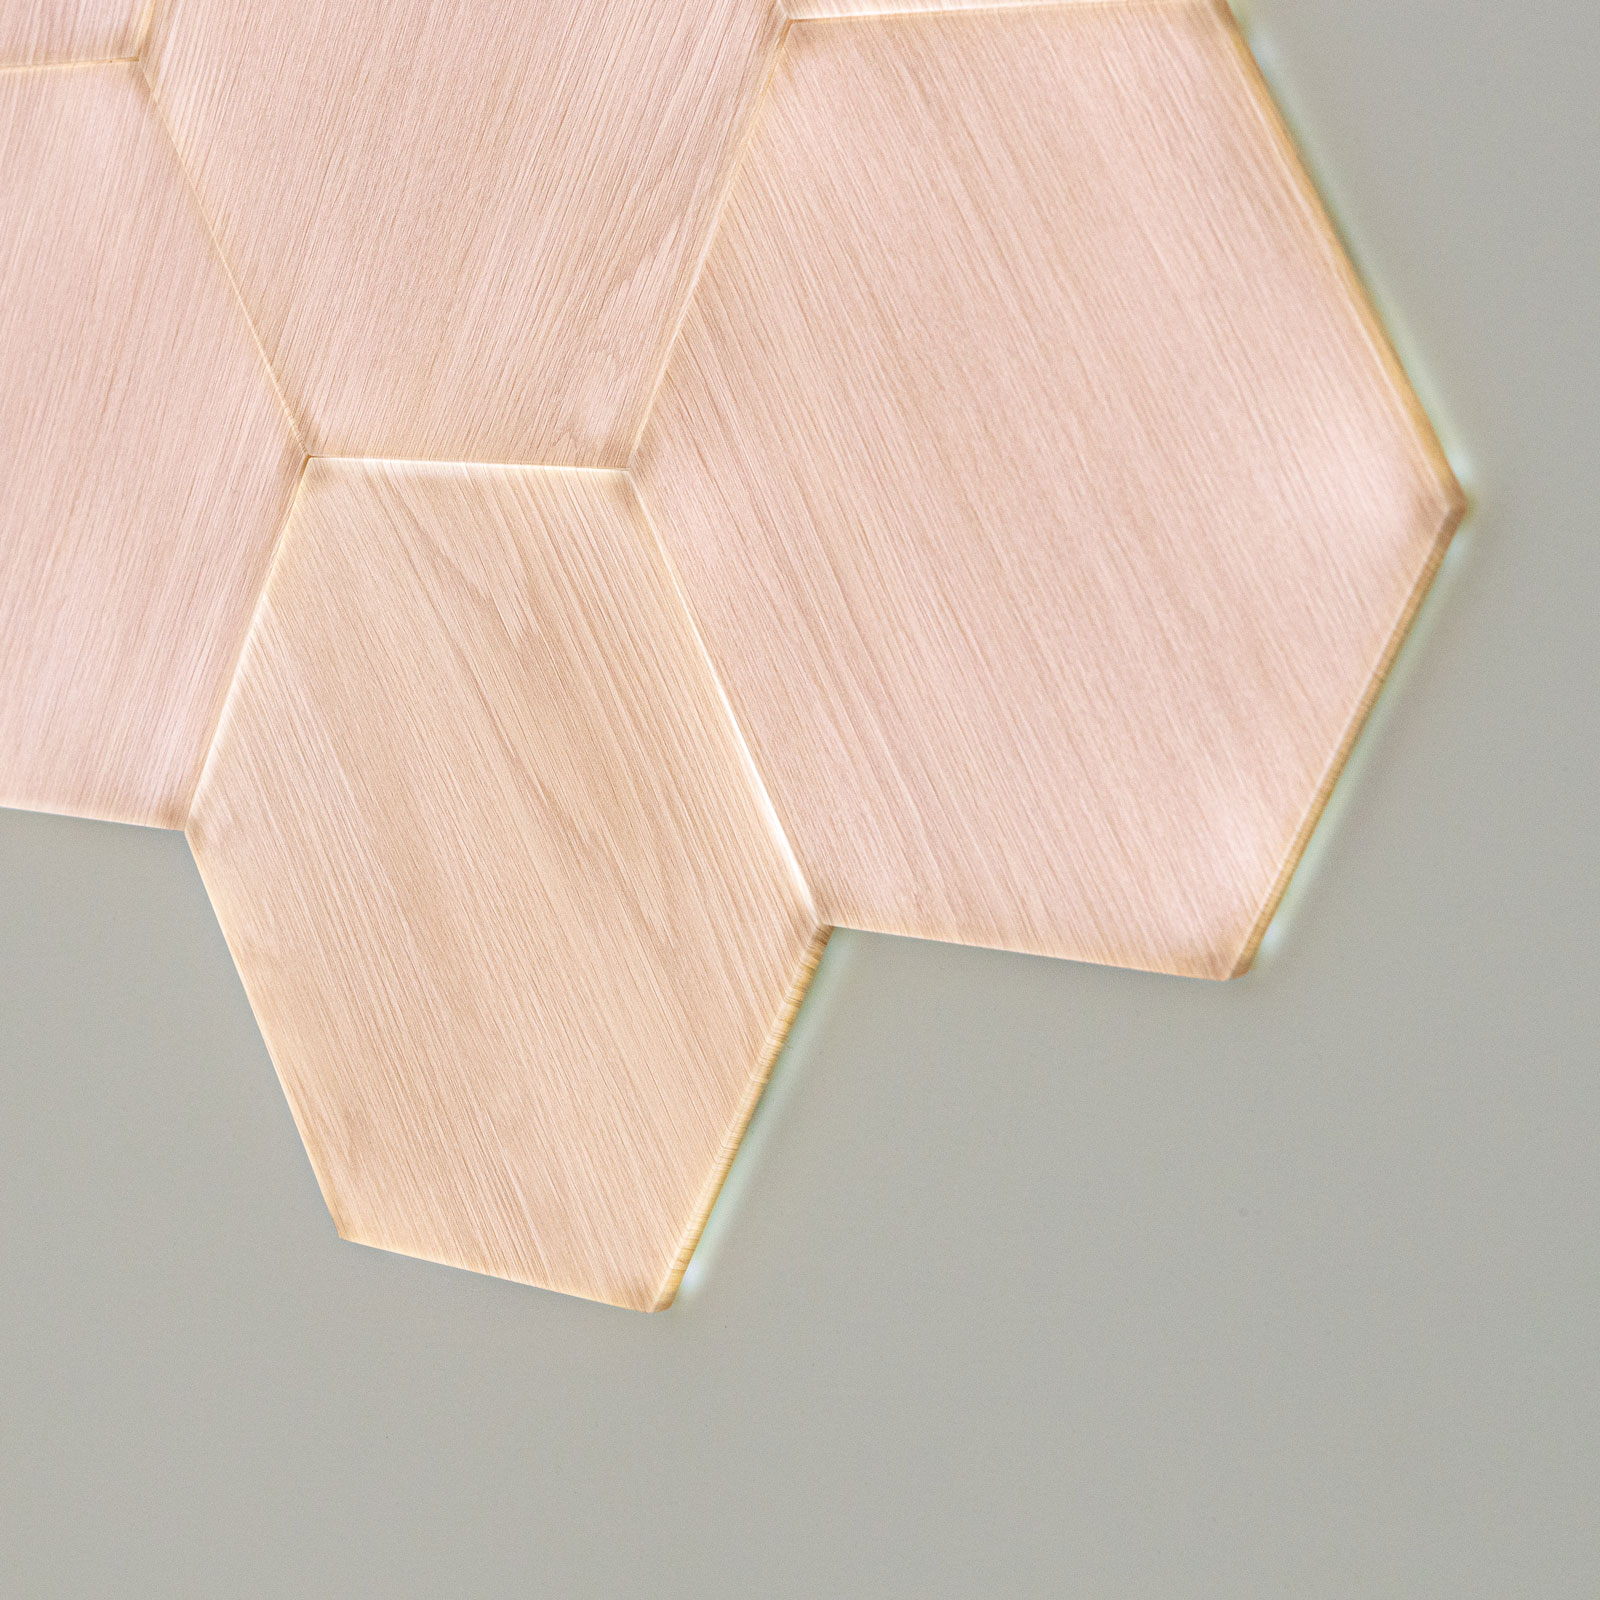 Nanoleaf Elements Wood Hexagons Starter Kit 13x